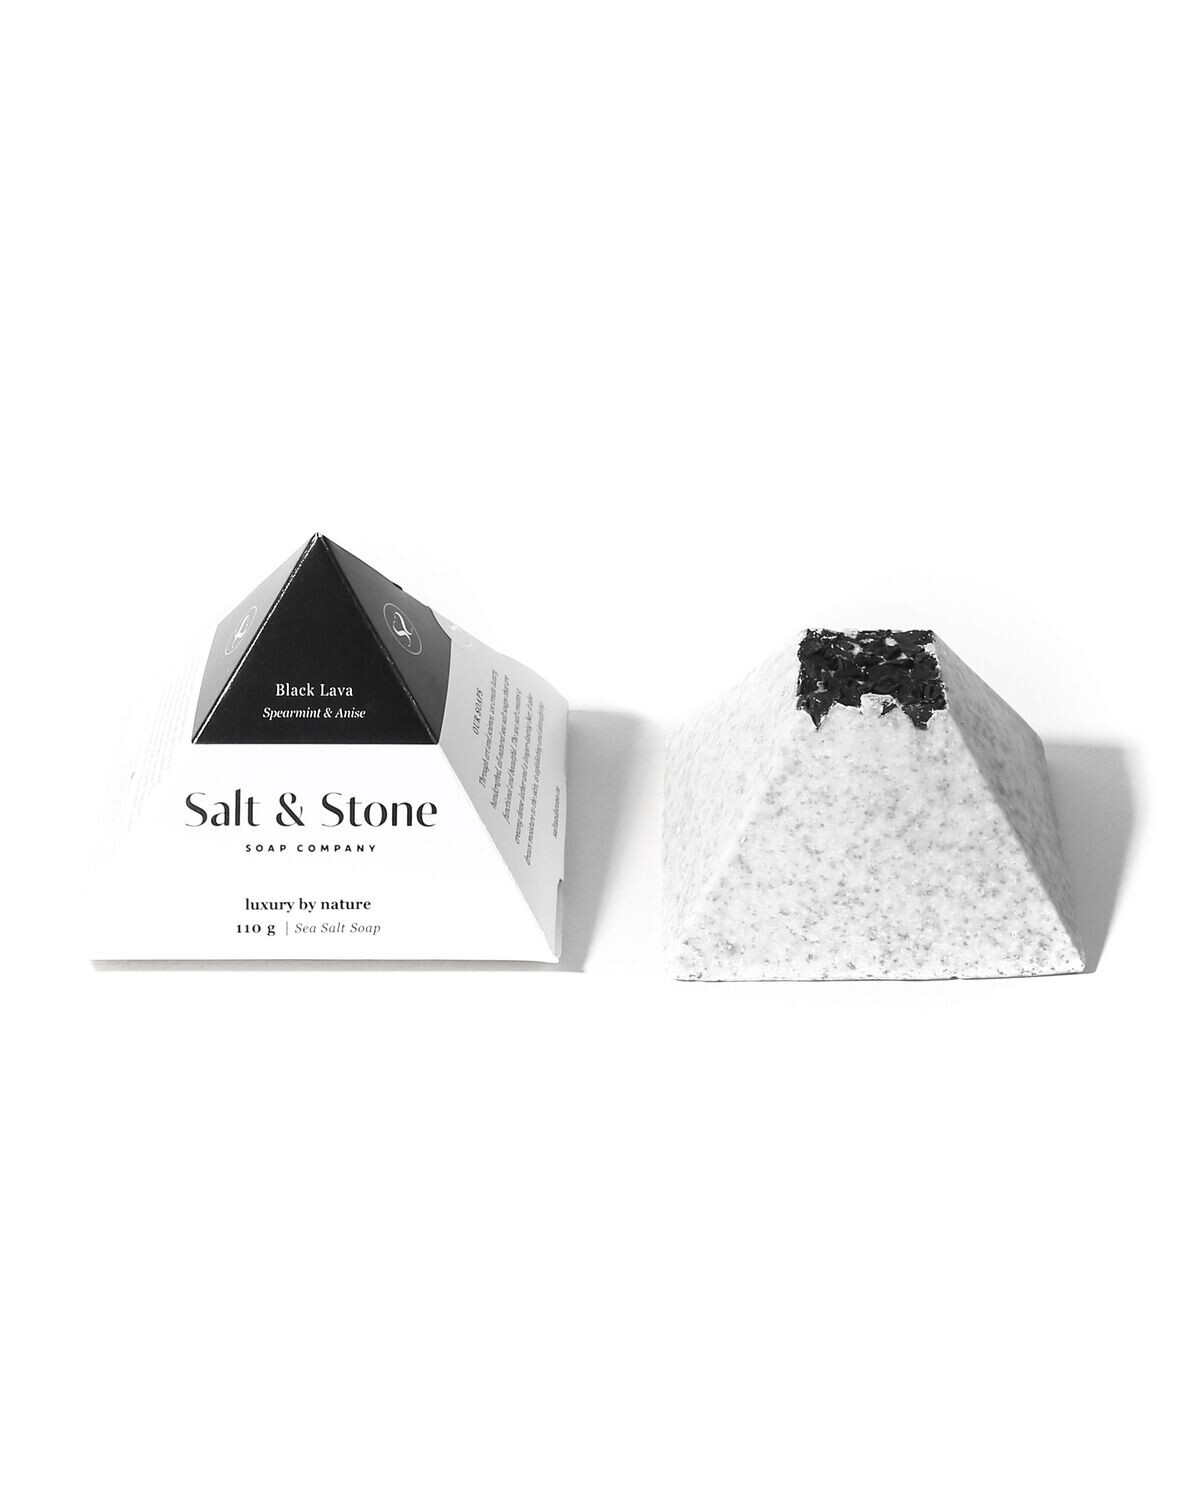 Salt & Stone Soap Company Black Lava Soap Bar